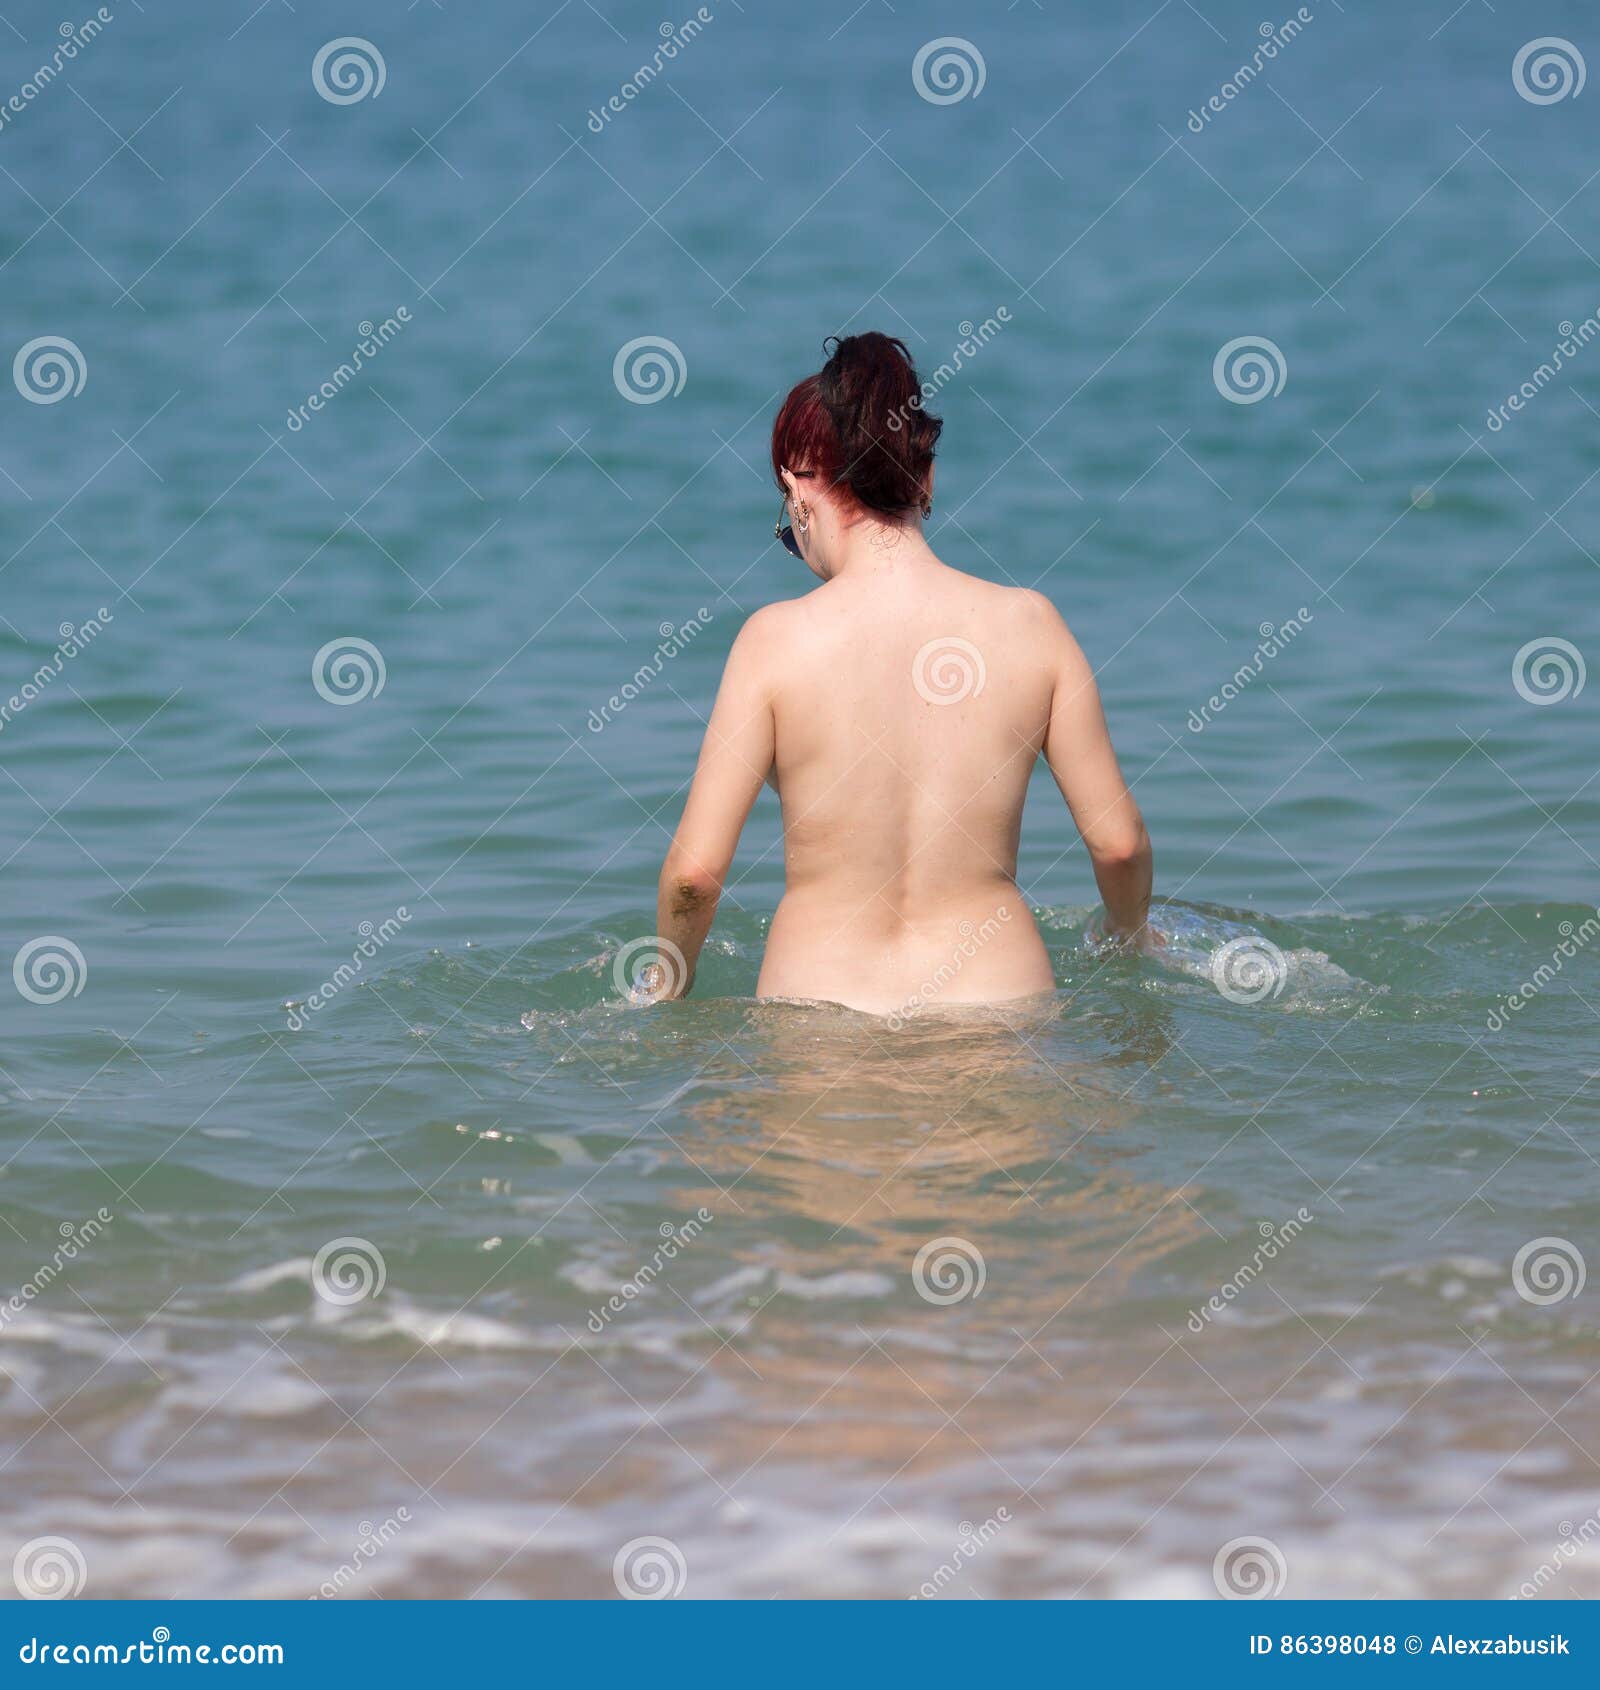 adam yborra recommends nude women skinny dipping pic